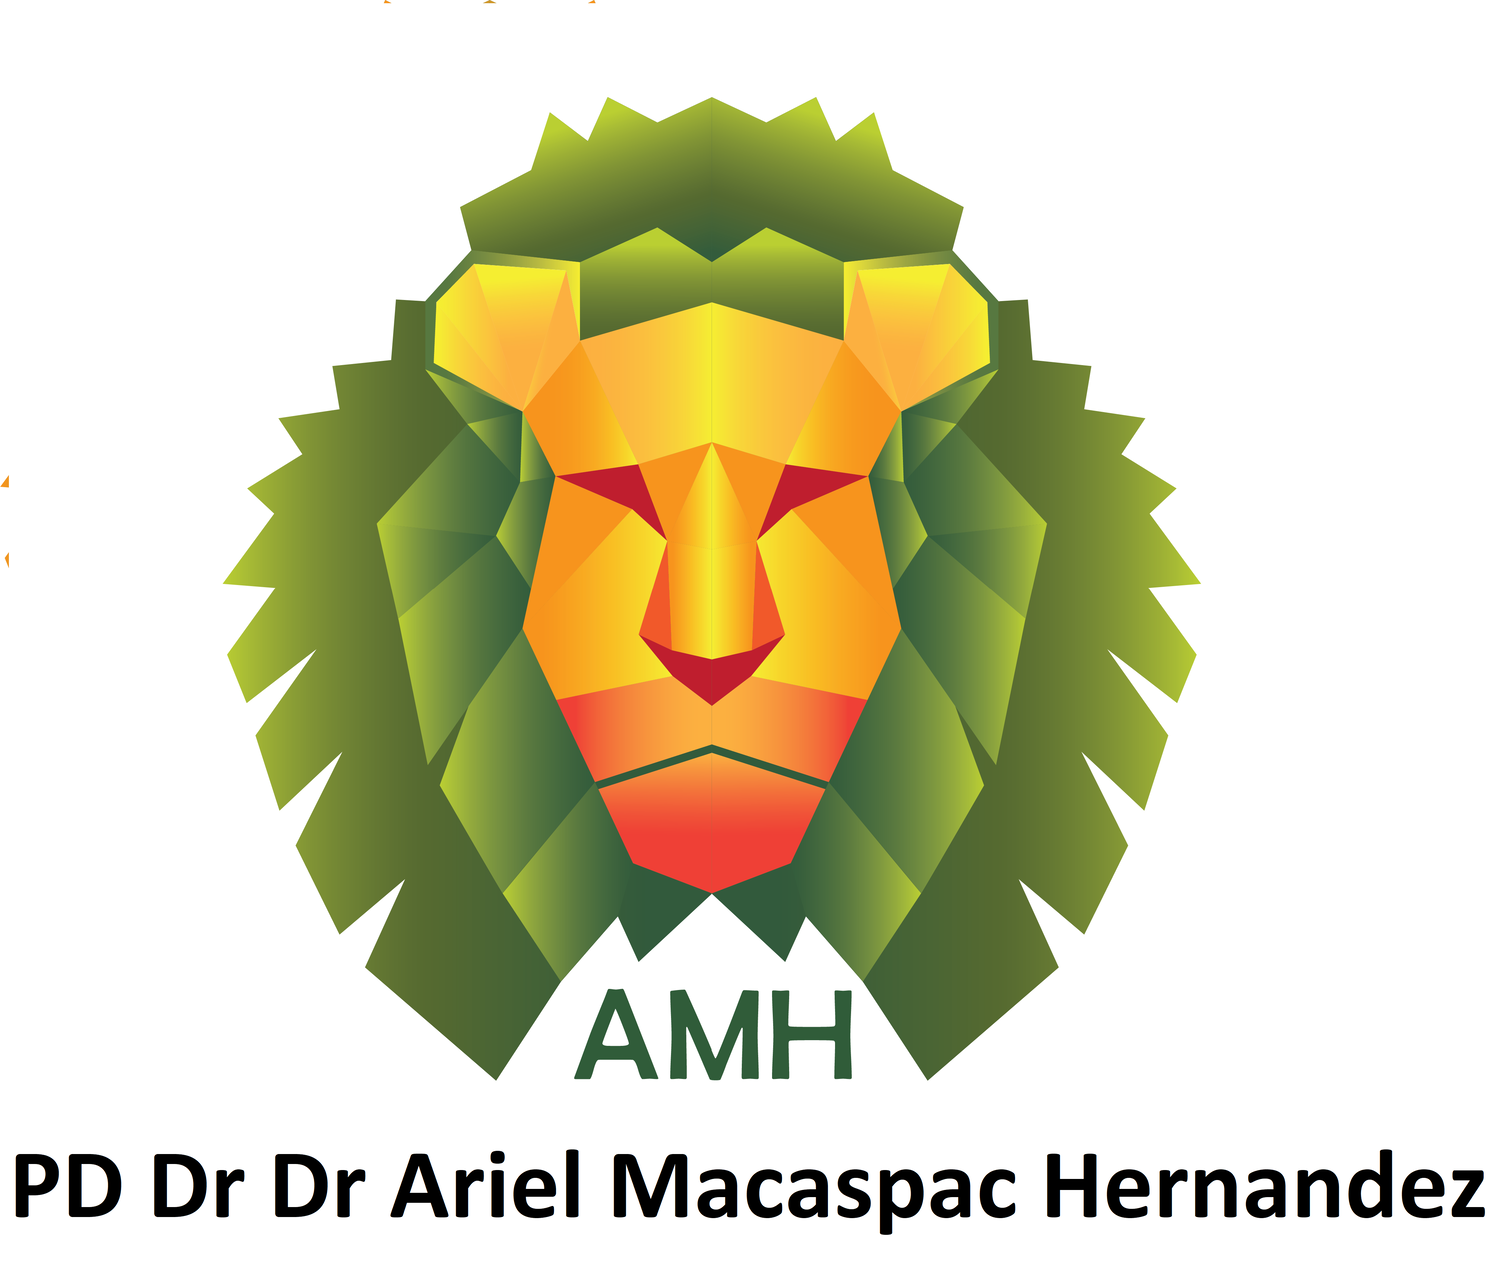 PD Dr Dr Ariel Macaspac Hernandez